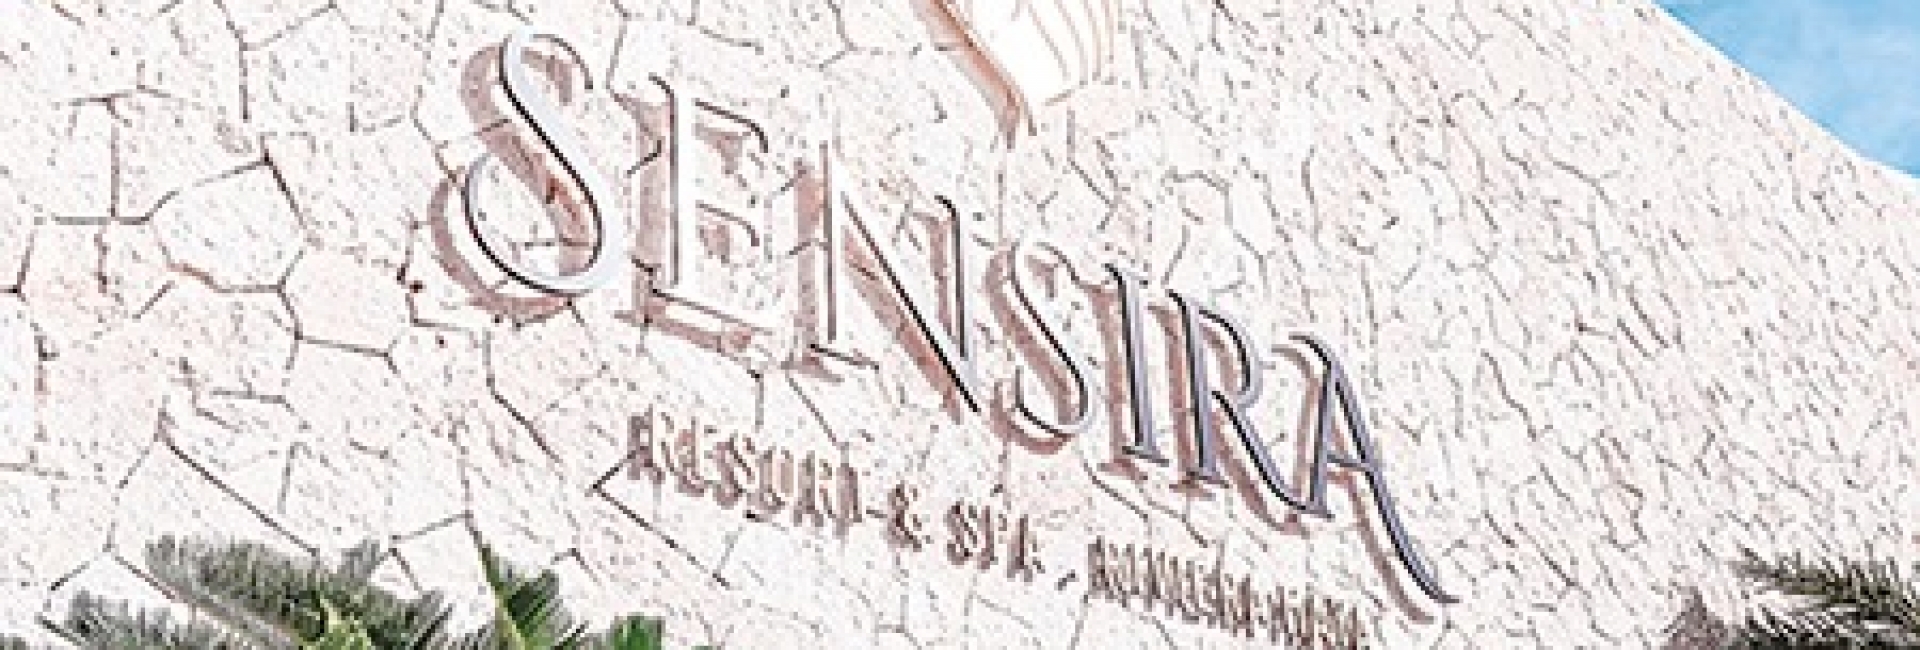 Opening Sensira Resort & Spa